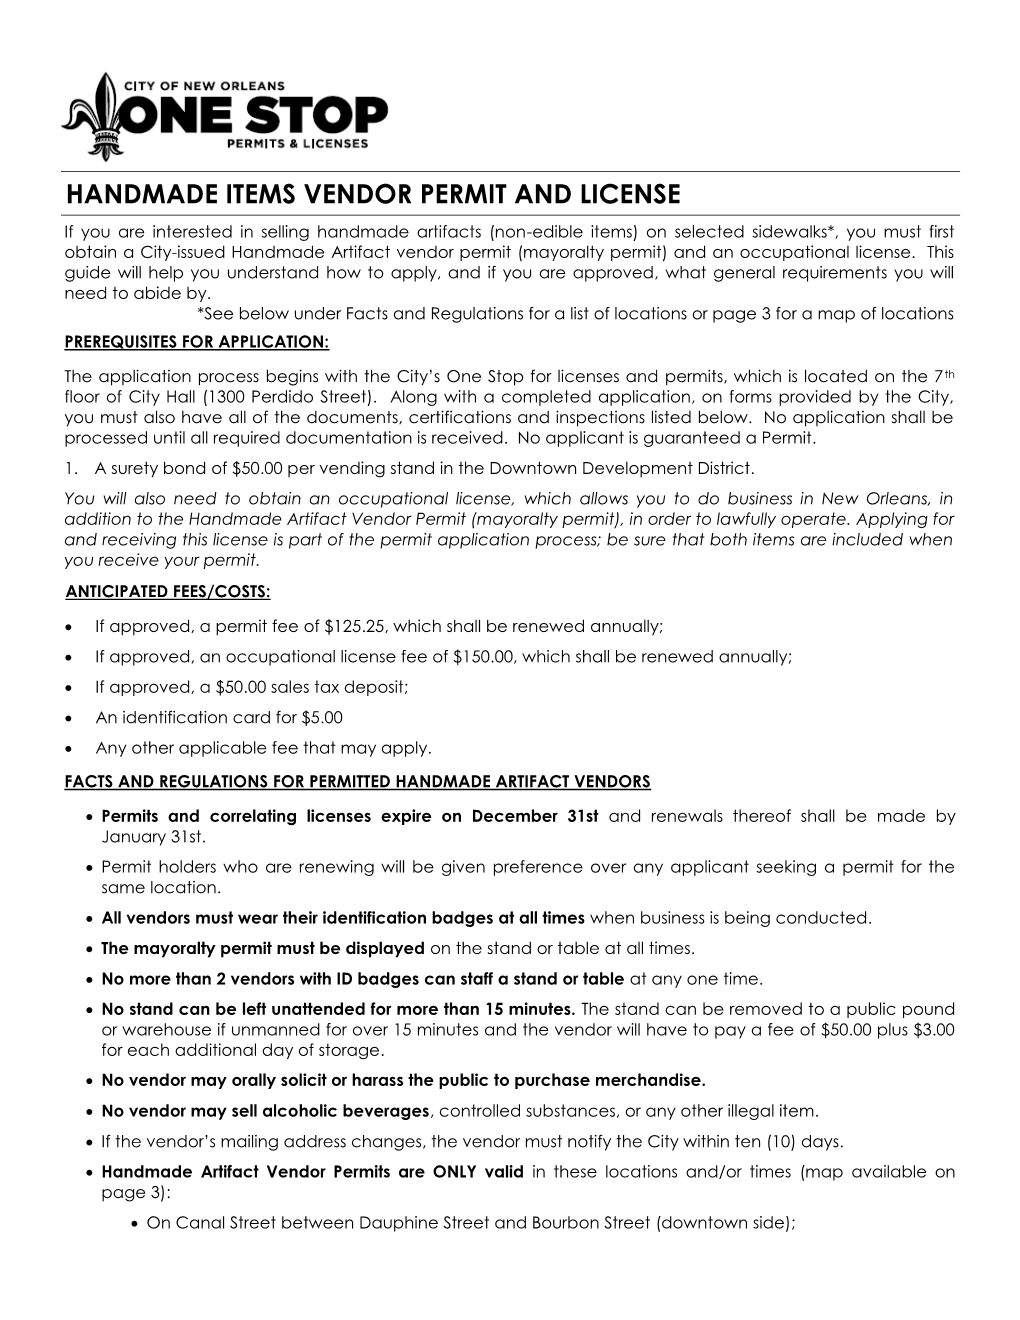 Handmade Items Vendor Permit and License